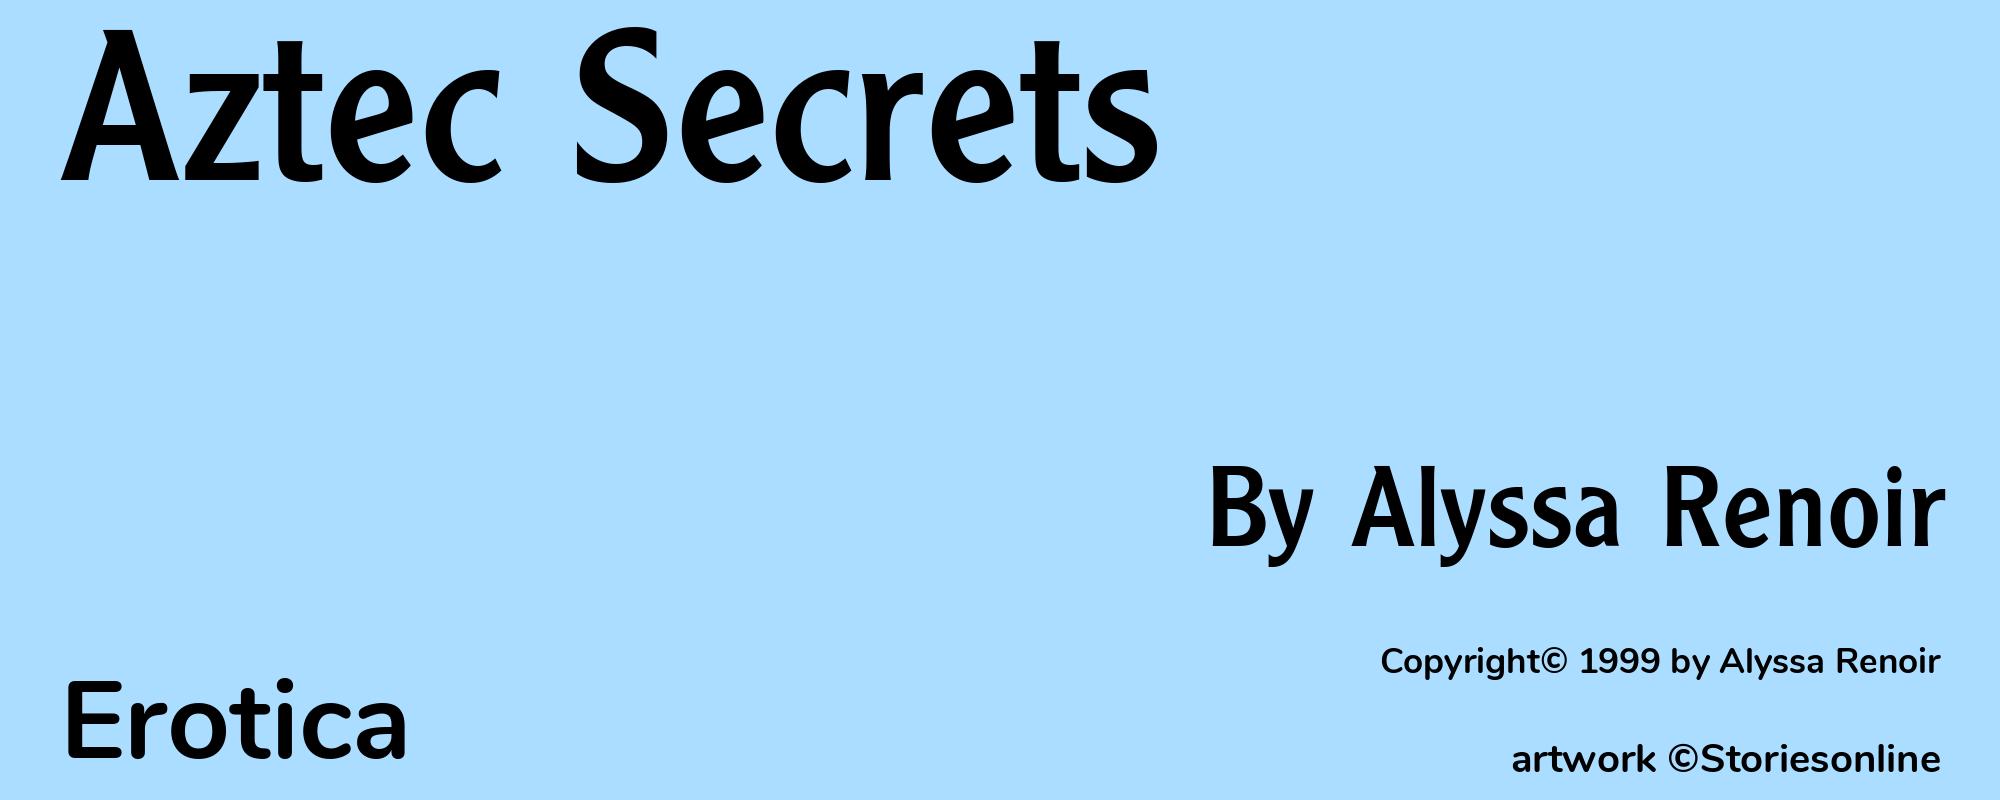 Aztec Secrets - Cover